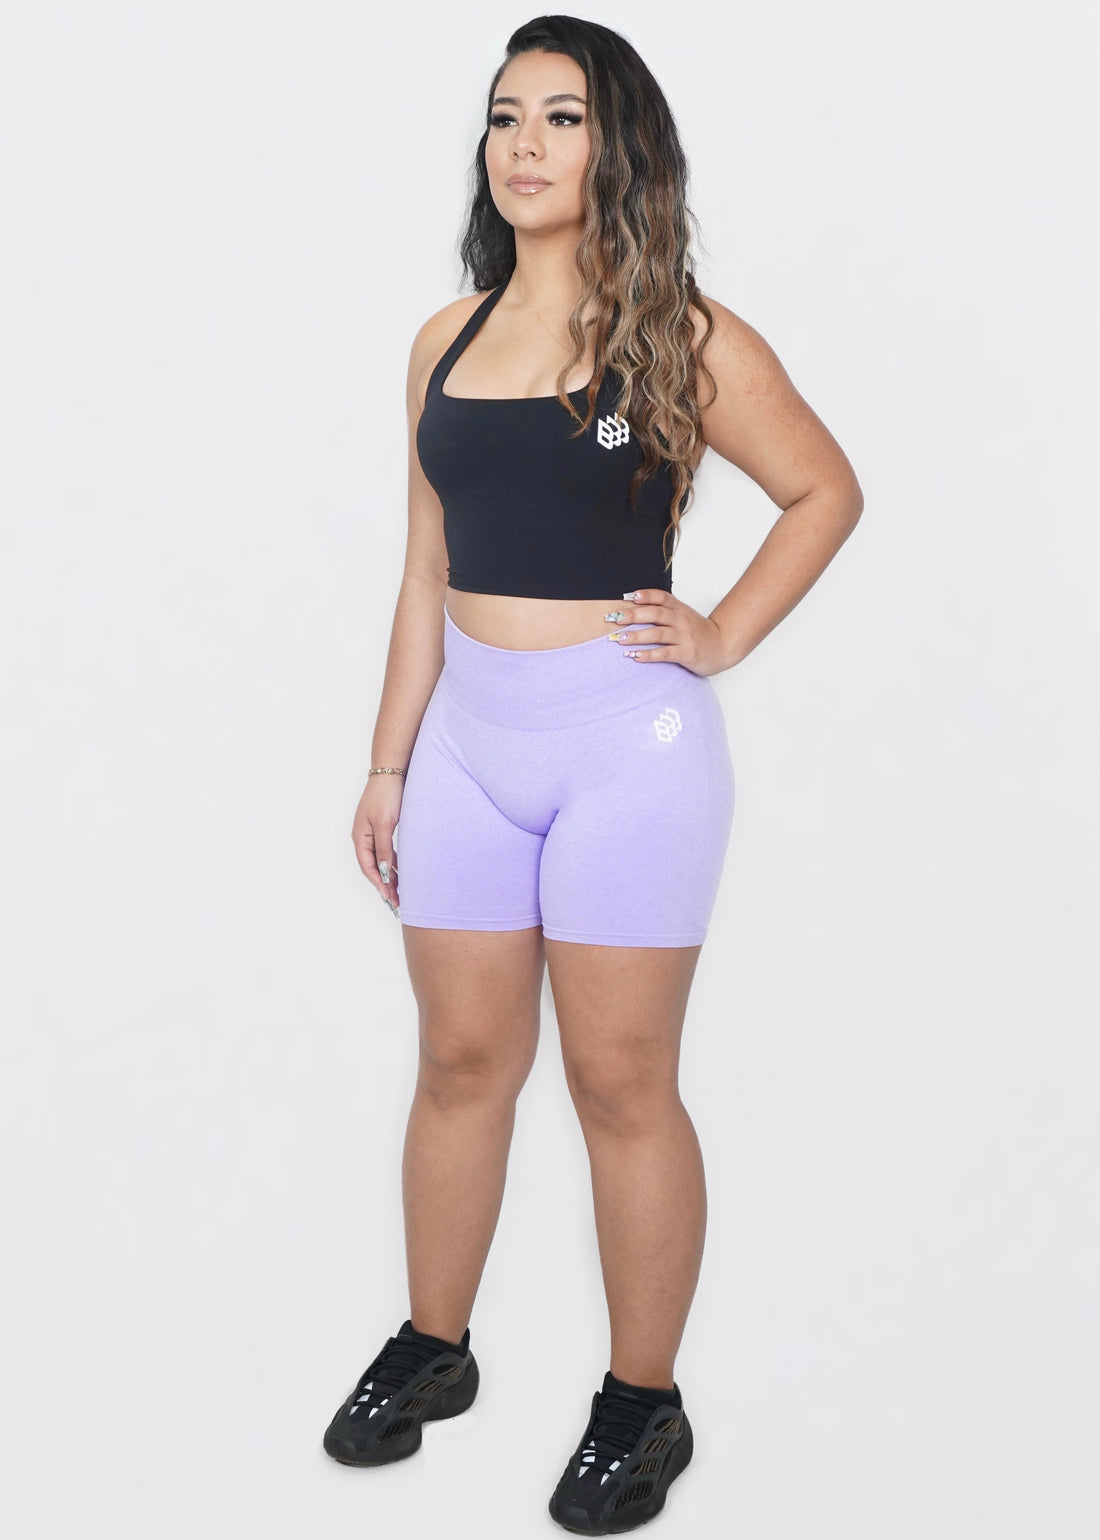 Seamless Scrunch Shorts - Lavender